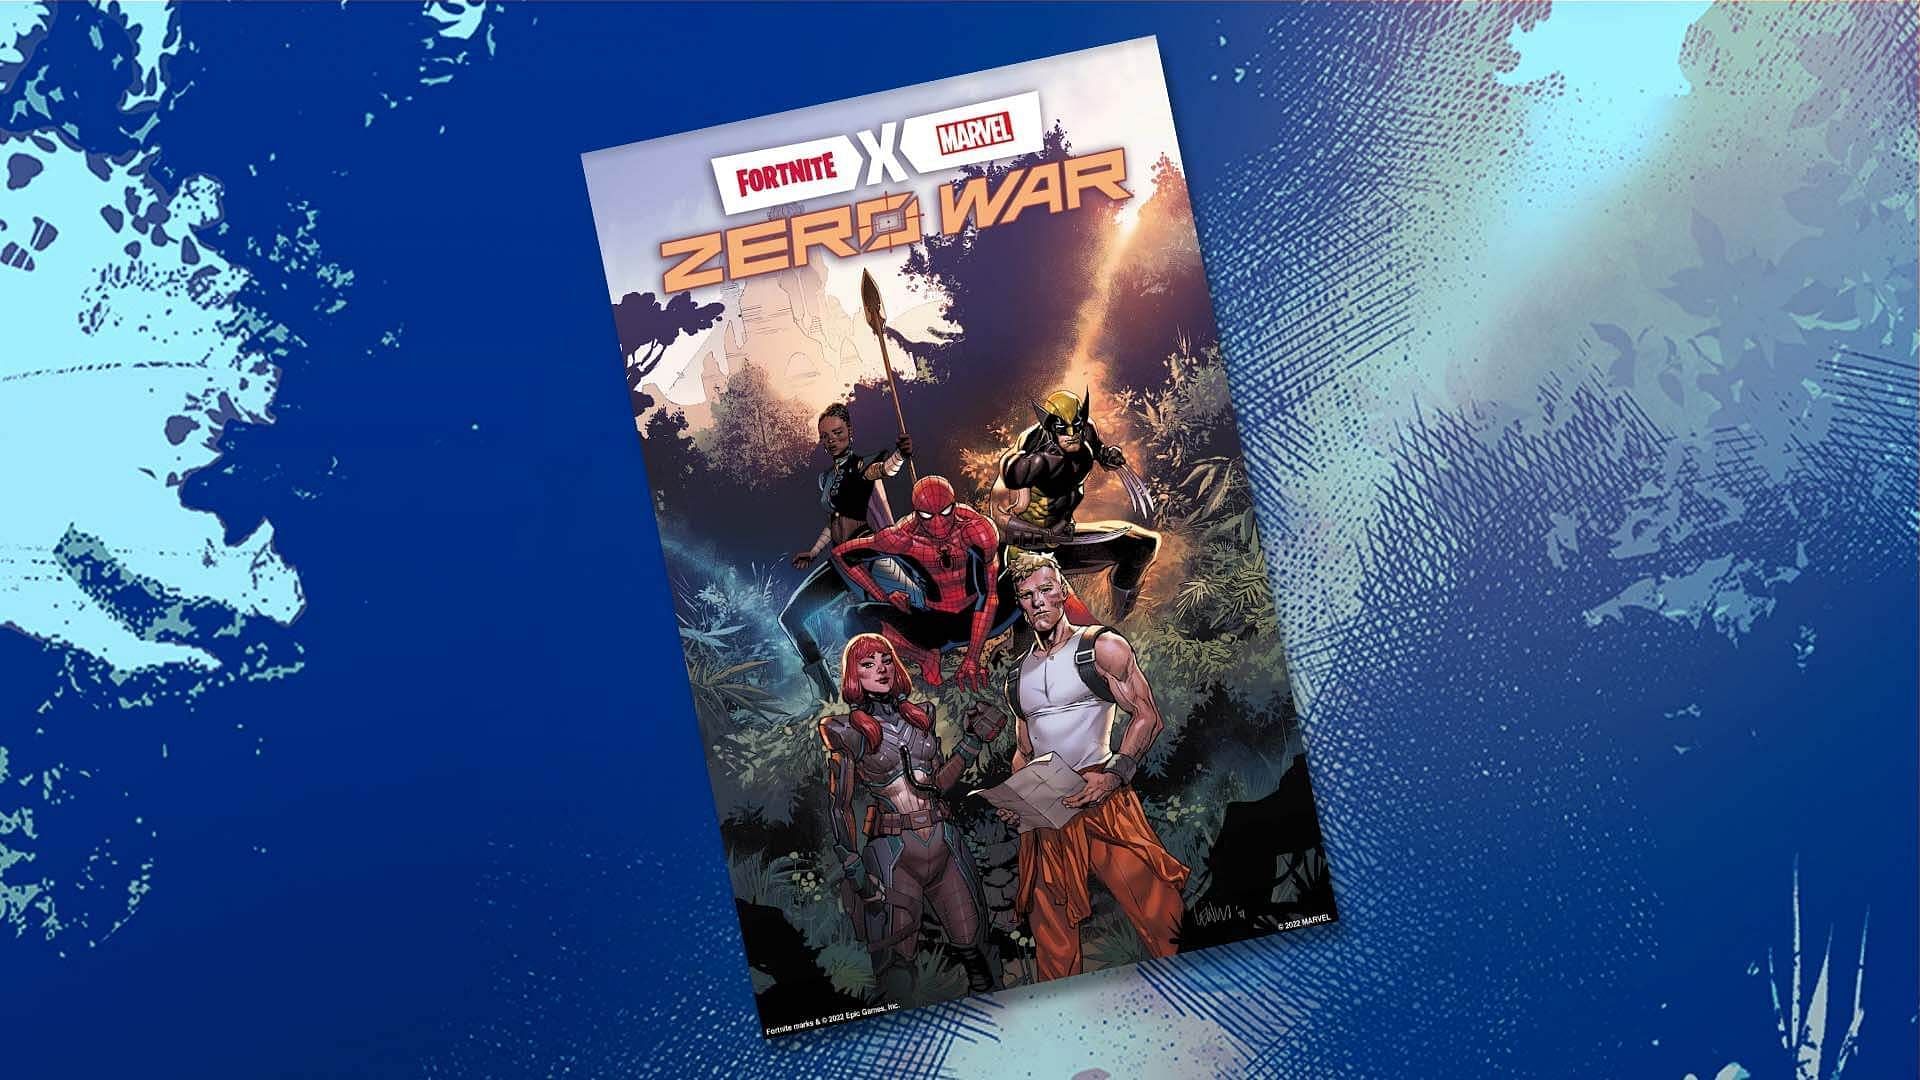 Zero War comic cover (Image via Epic Games)